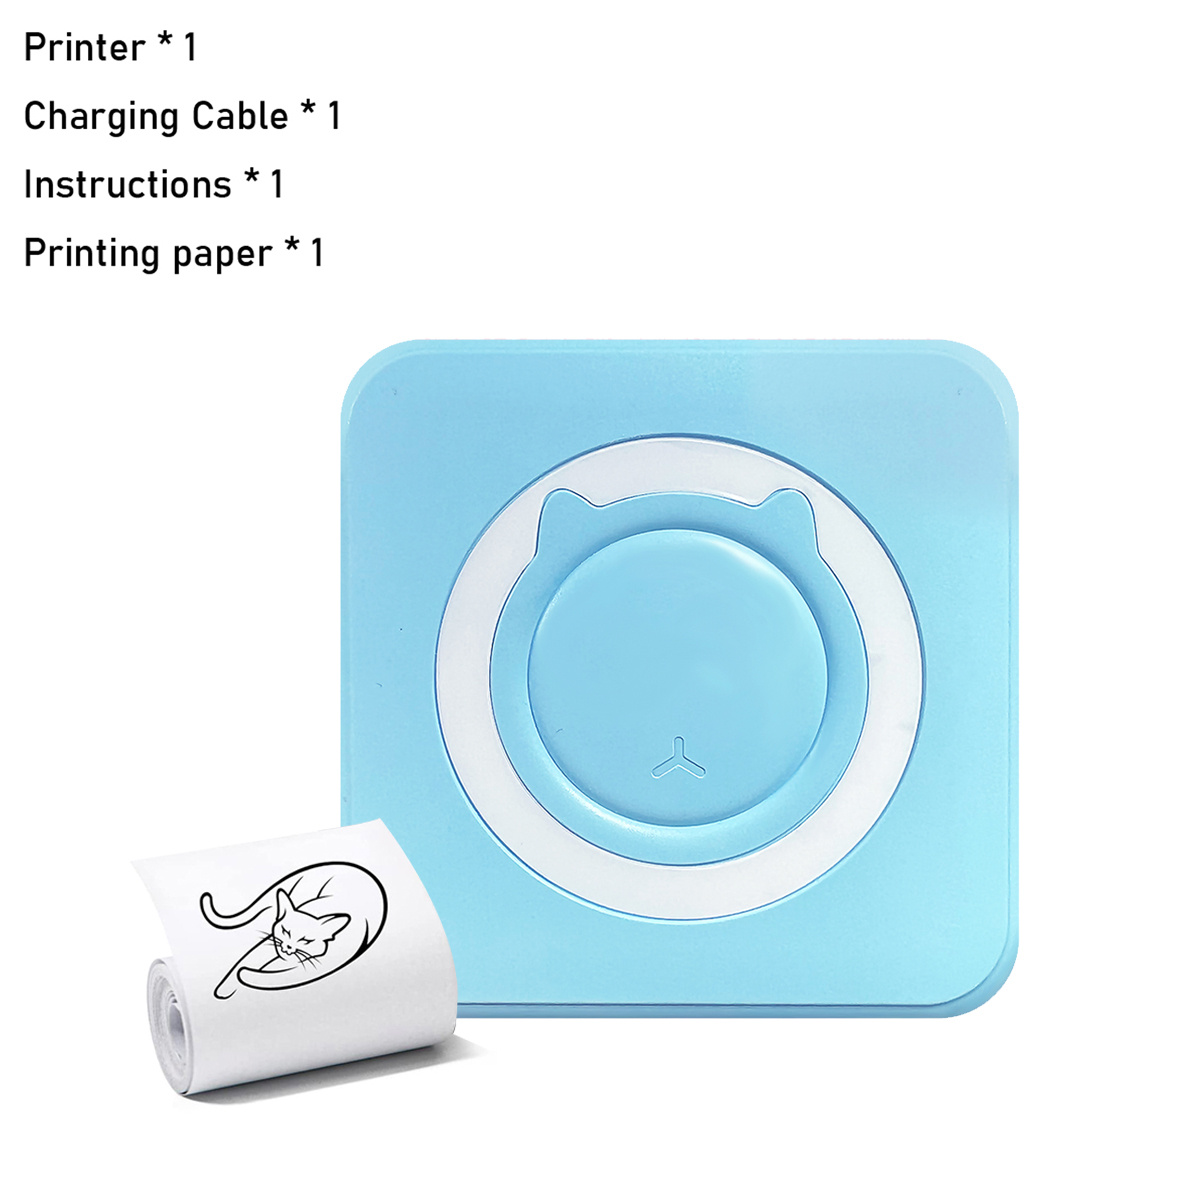 Impresora portátil, mini impresora de bolsillo, mini impresora térmica,  impresora fotográfica inalámbrica Bluetooth BT 4.0 de 200 DPI, impresora